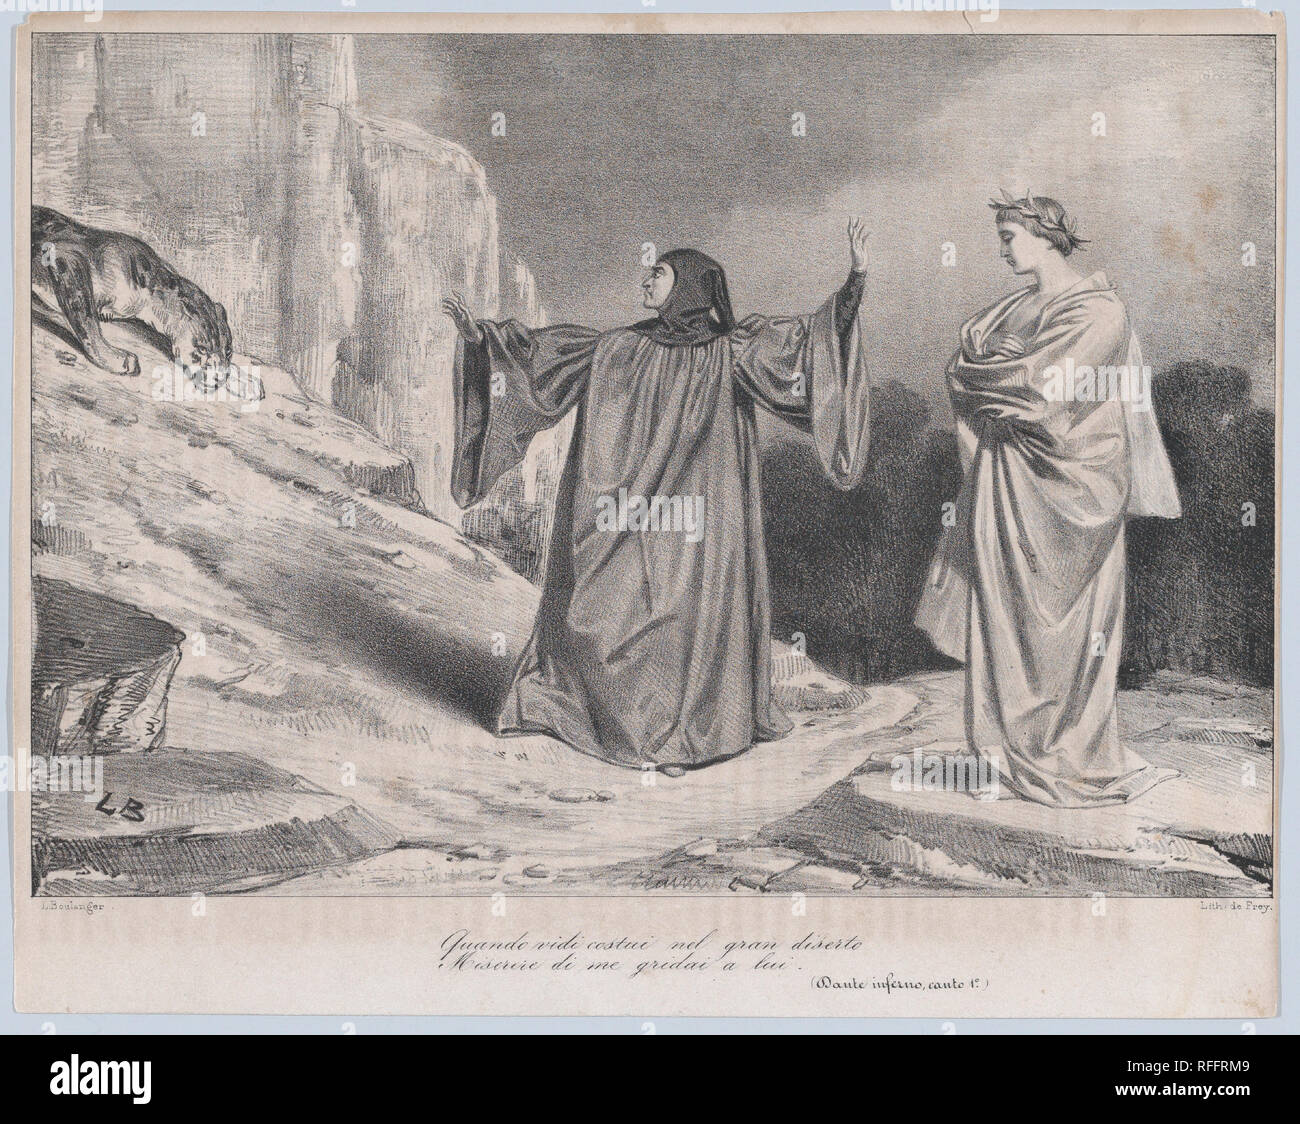 Quando vidi costui nel gran diserte / Misere di me gridai a lui. Artist: Louis Boulanger (French, 1807-1867 Dijon). Dimensions: Sheet: 7 13/16 × 9 3/4 in. (19.8 × 24.8 cm)  Image: 6 11/16 × 9 9/16 in. (17 × 24.3 cm). Publisher: Frey. Series/Portfolio: Dante Inferno. Date: 1835. Museum: Metropolitan Museum of Art, New York, USA. Stock Photo